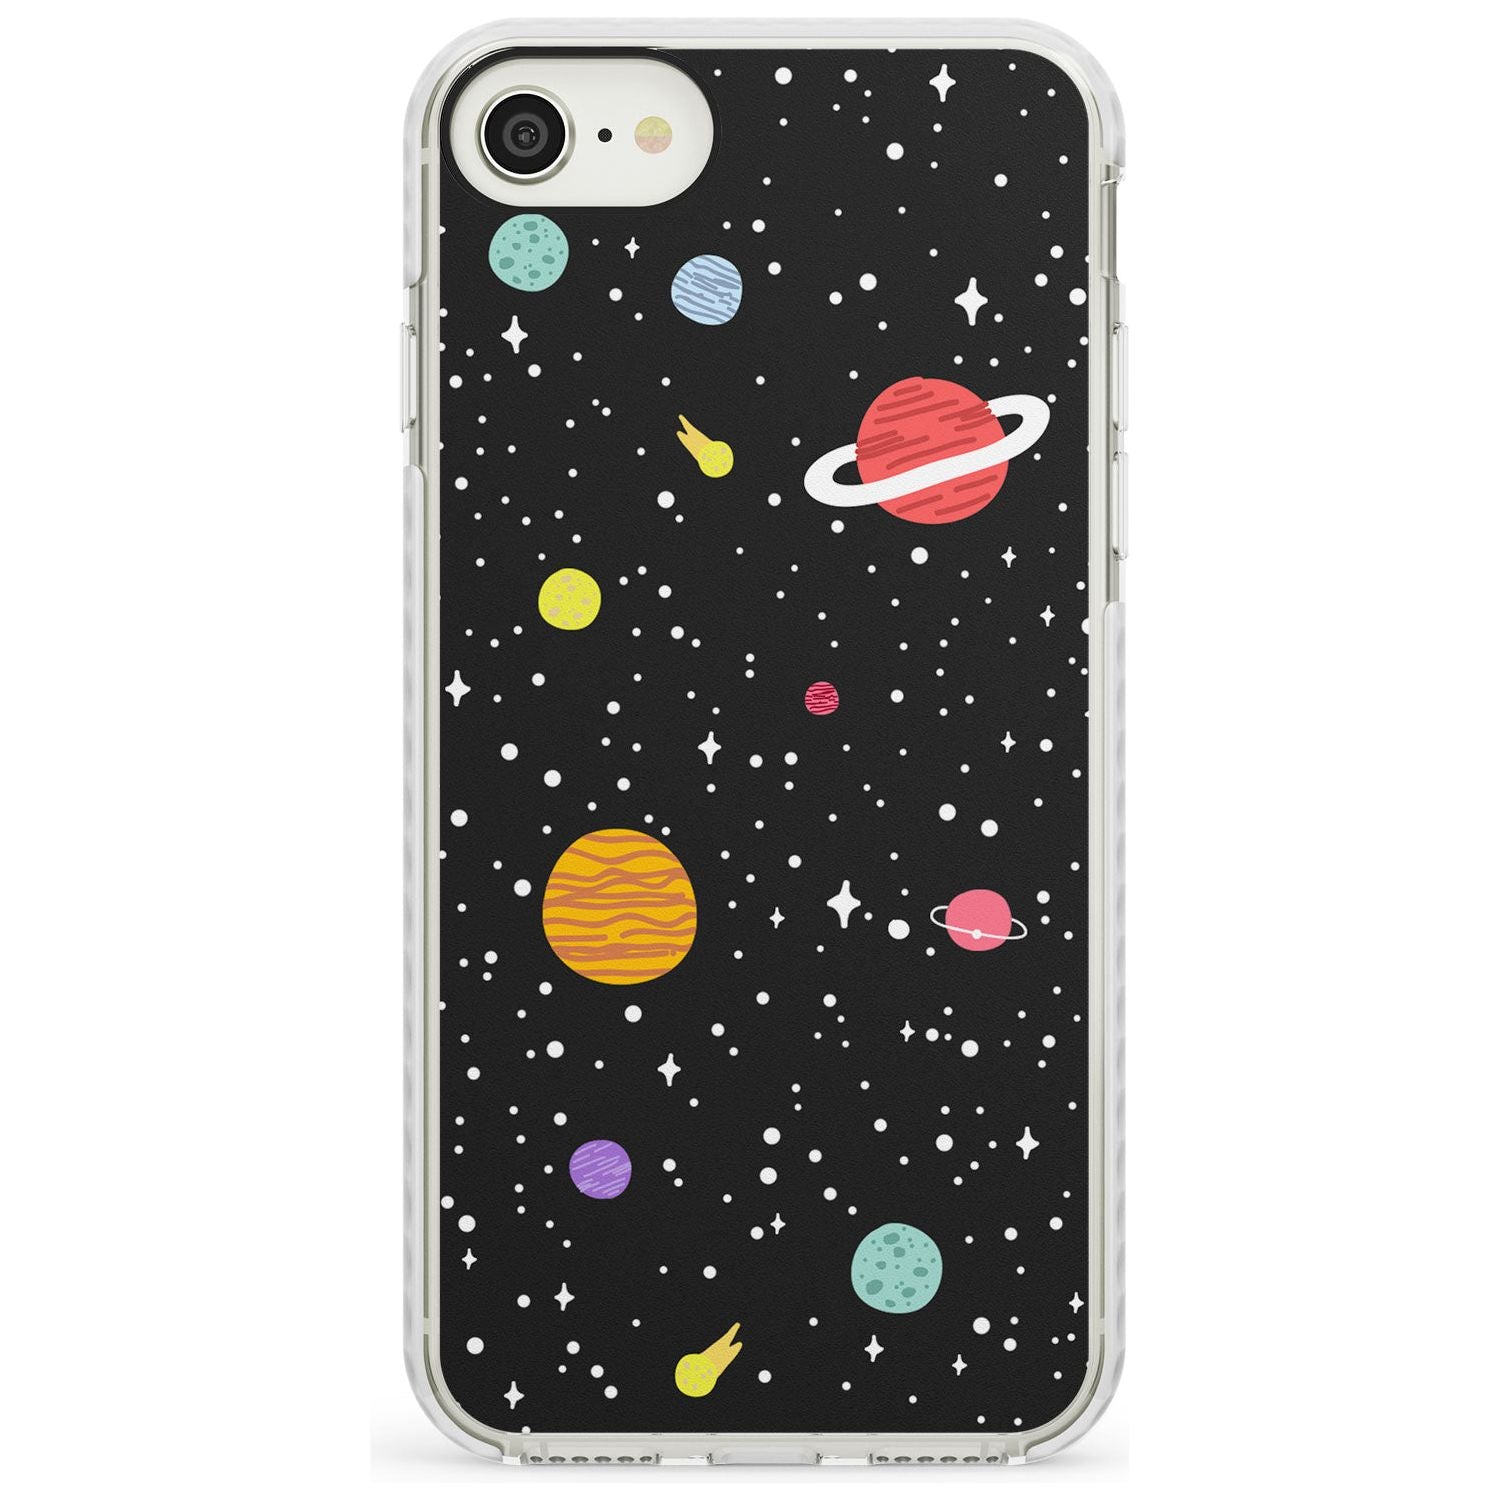 Cute Cartoon Planets Impact Phone Case for iPhone SE 8 7 Plus